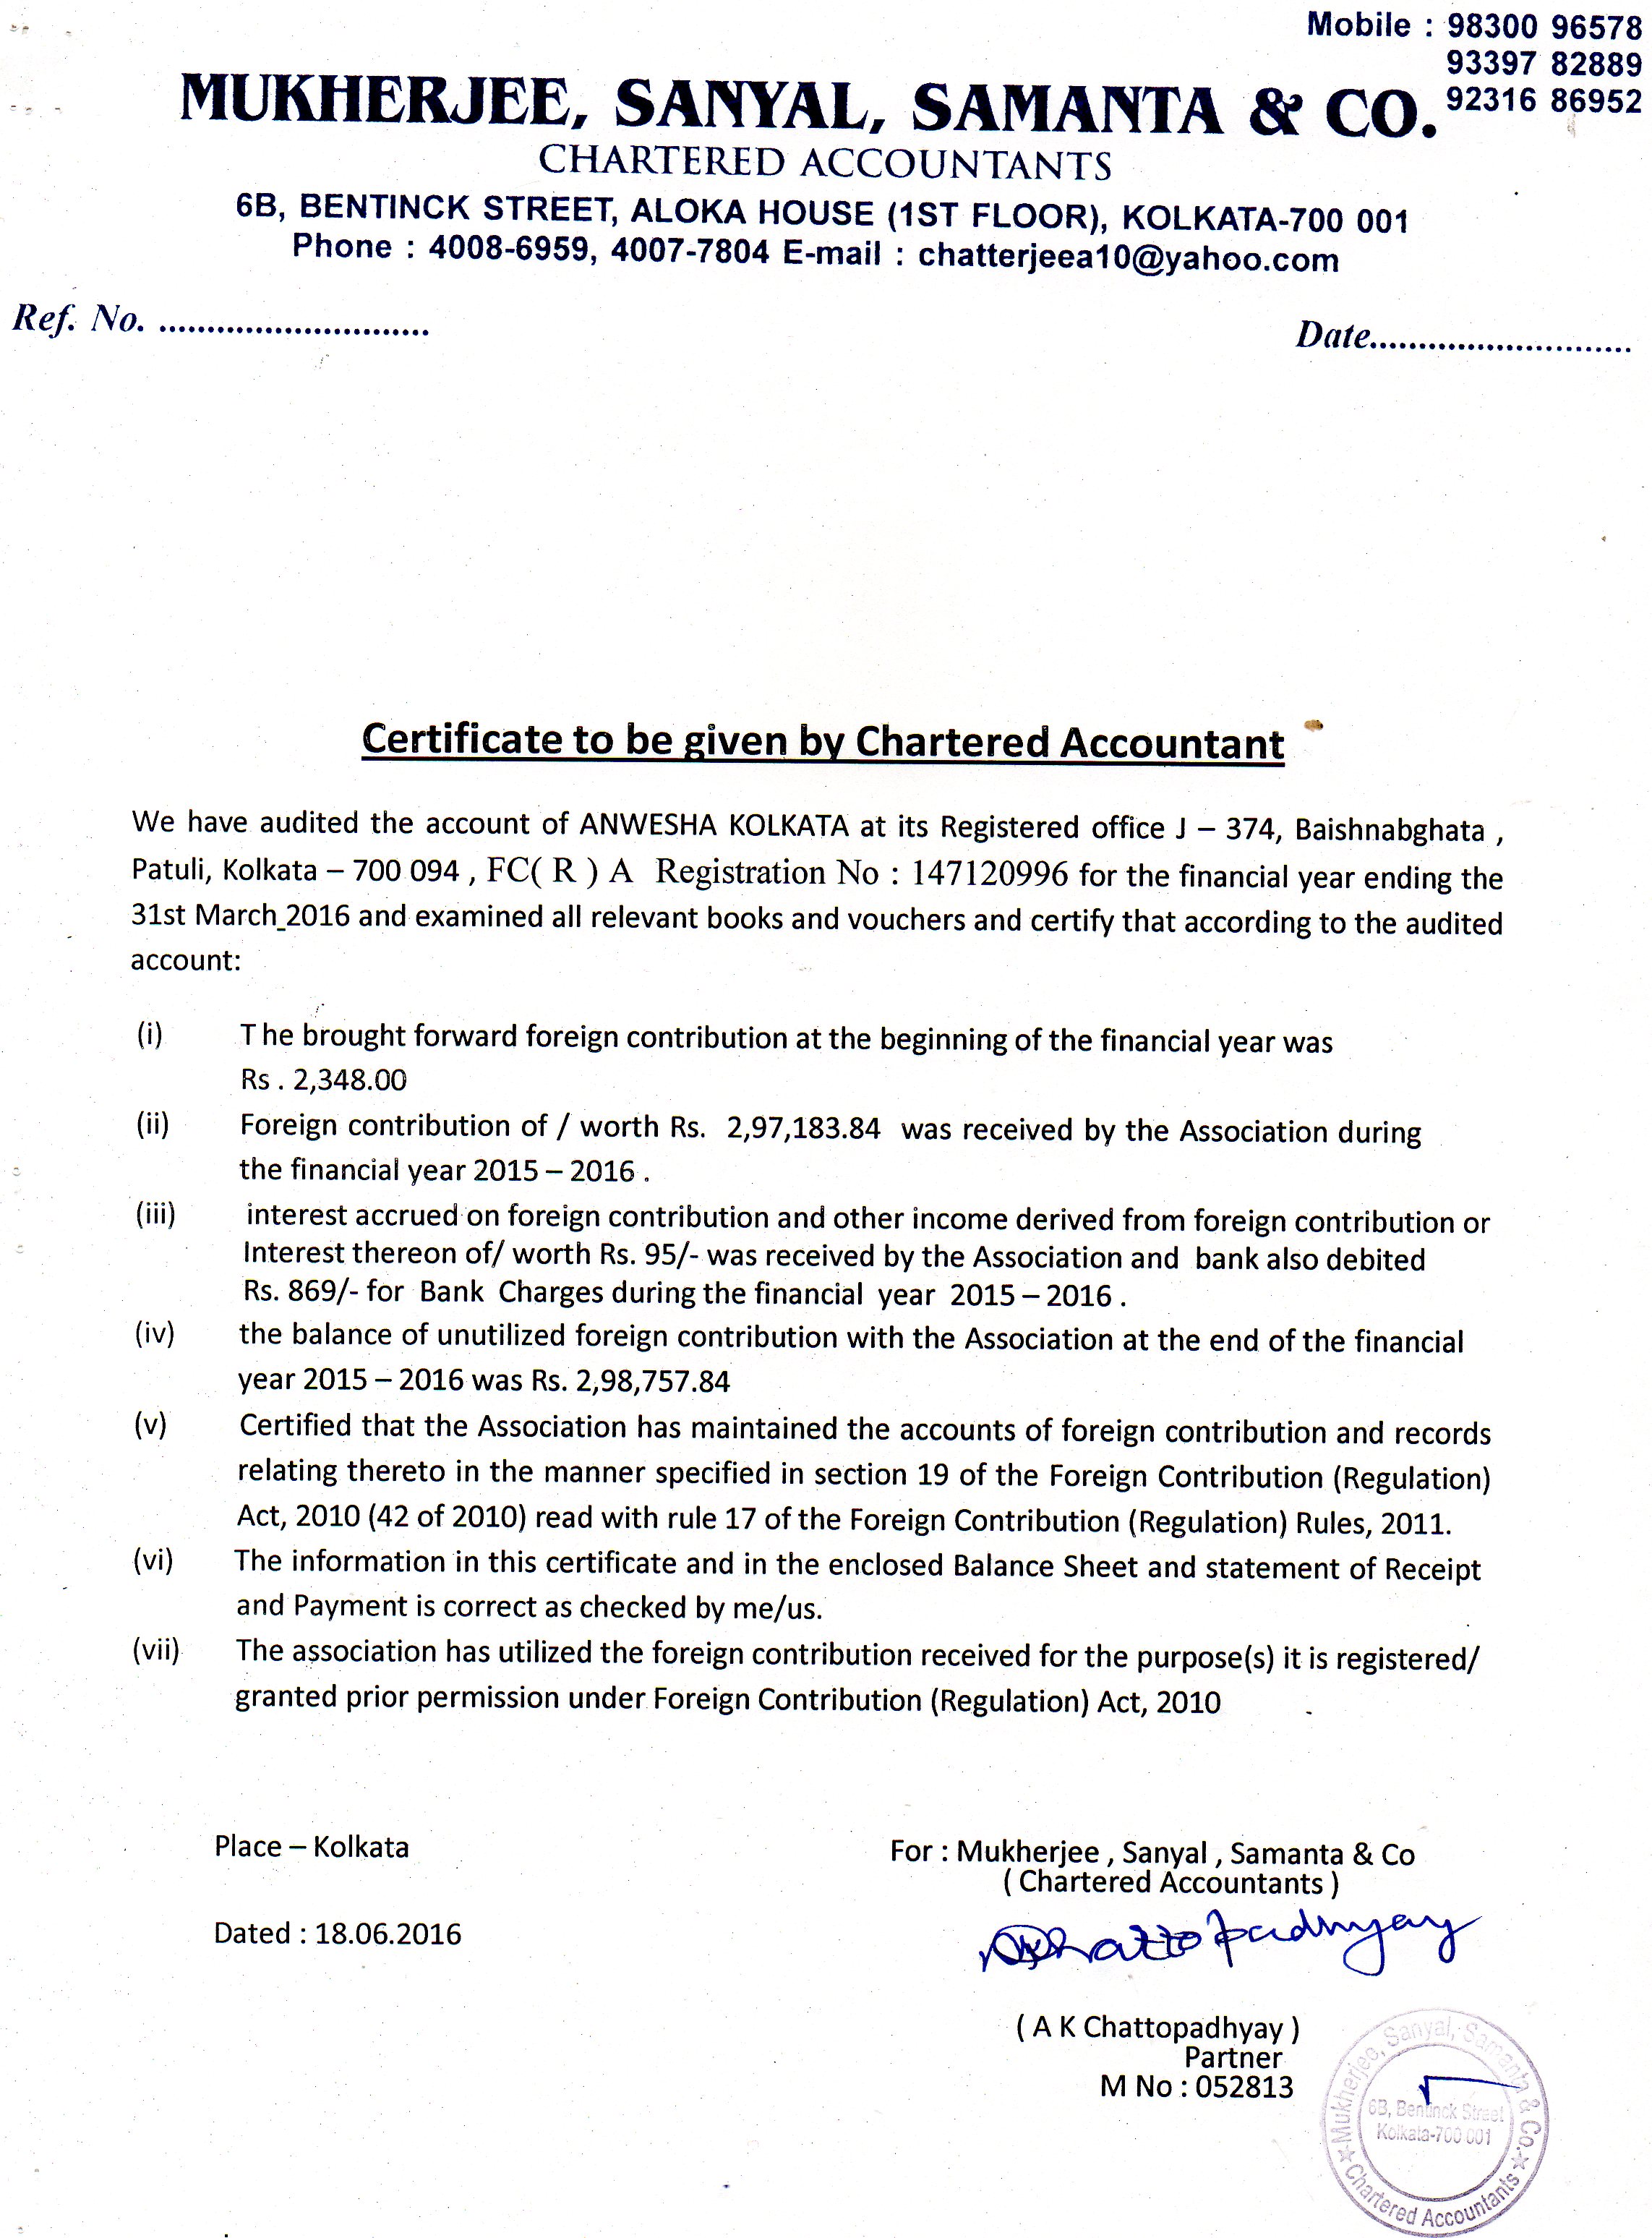 Auditor's Certificate 15-16